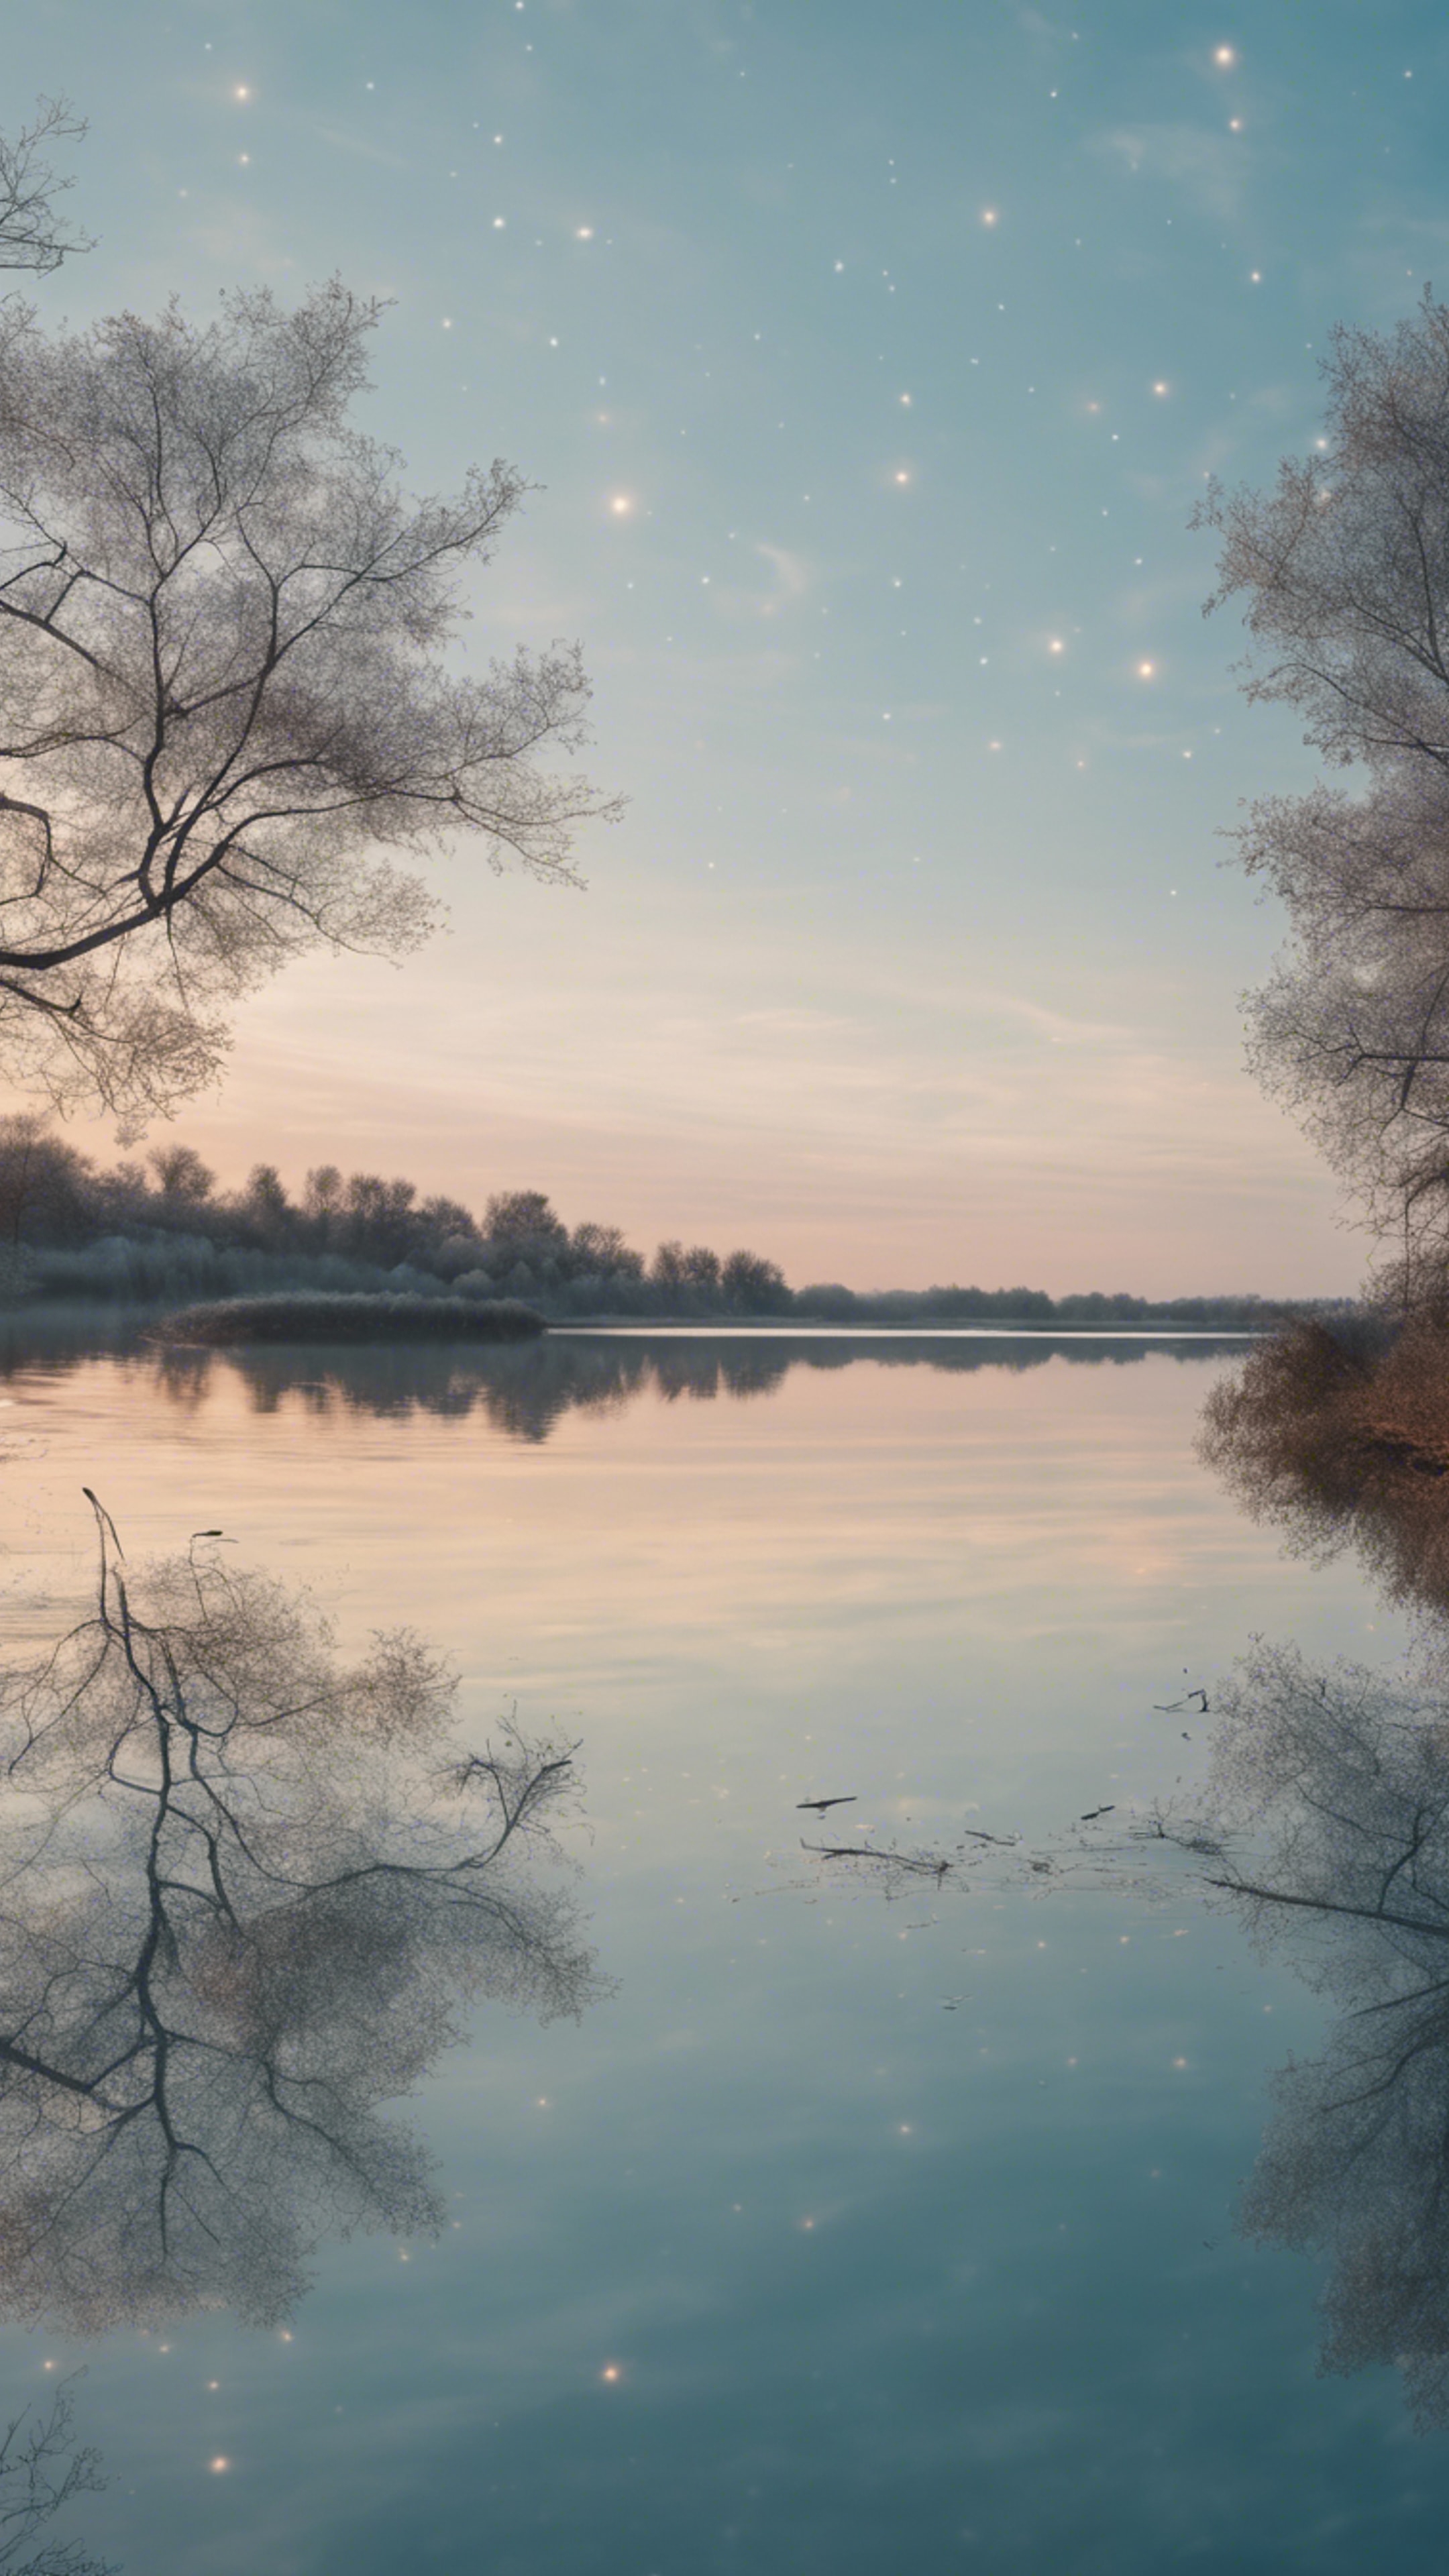 A pastel blue sky at dawn reflecting on a tranquil lake. 墙纸[f0afb54b812141669b7c]